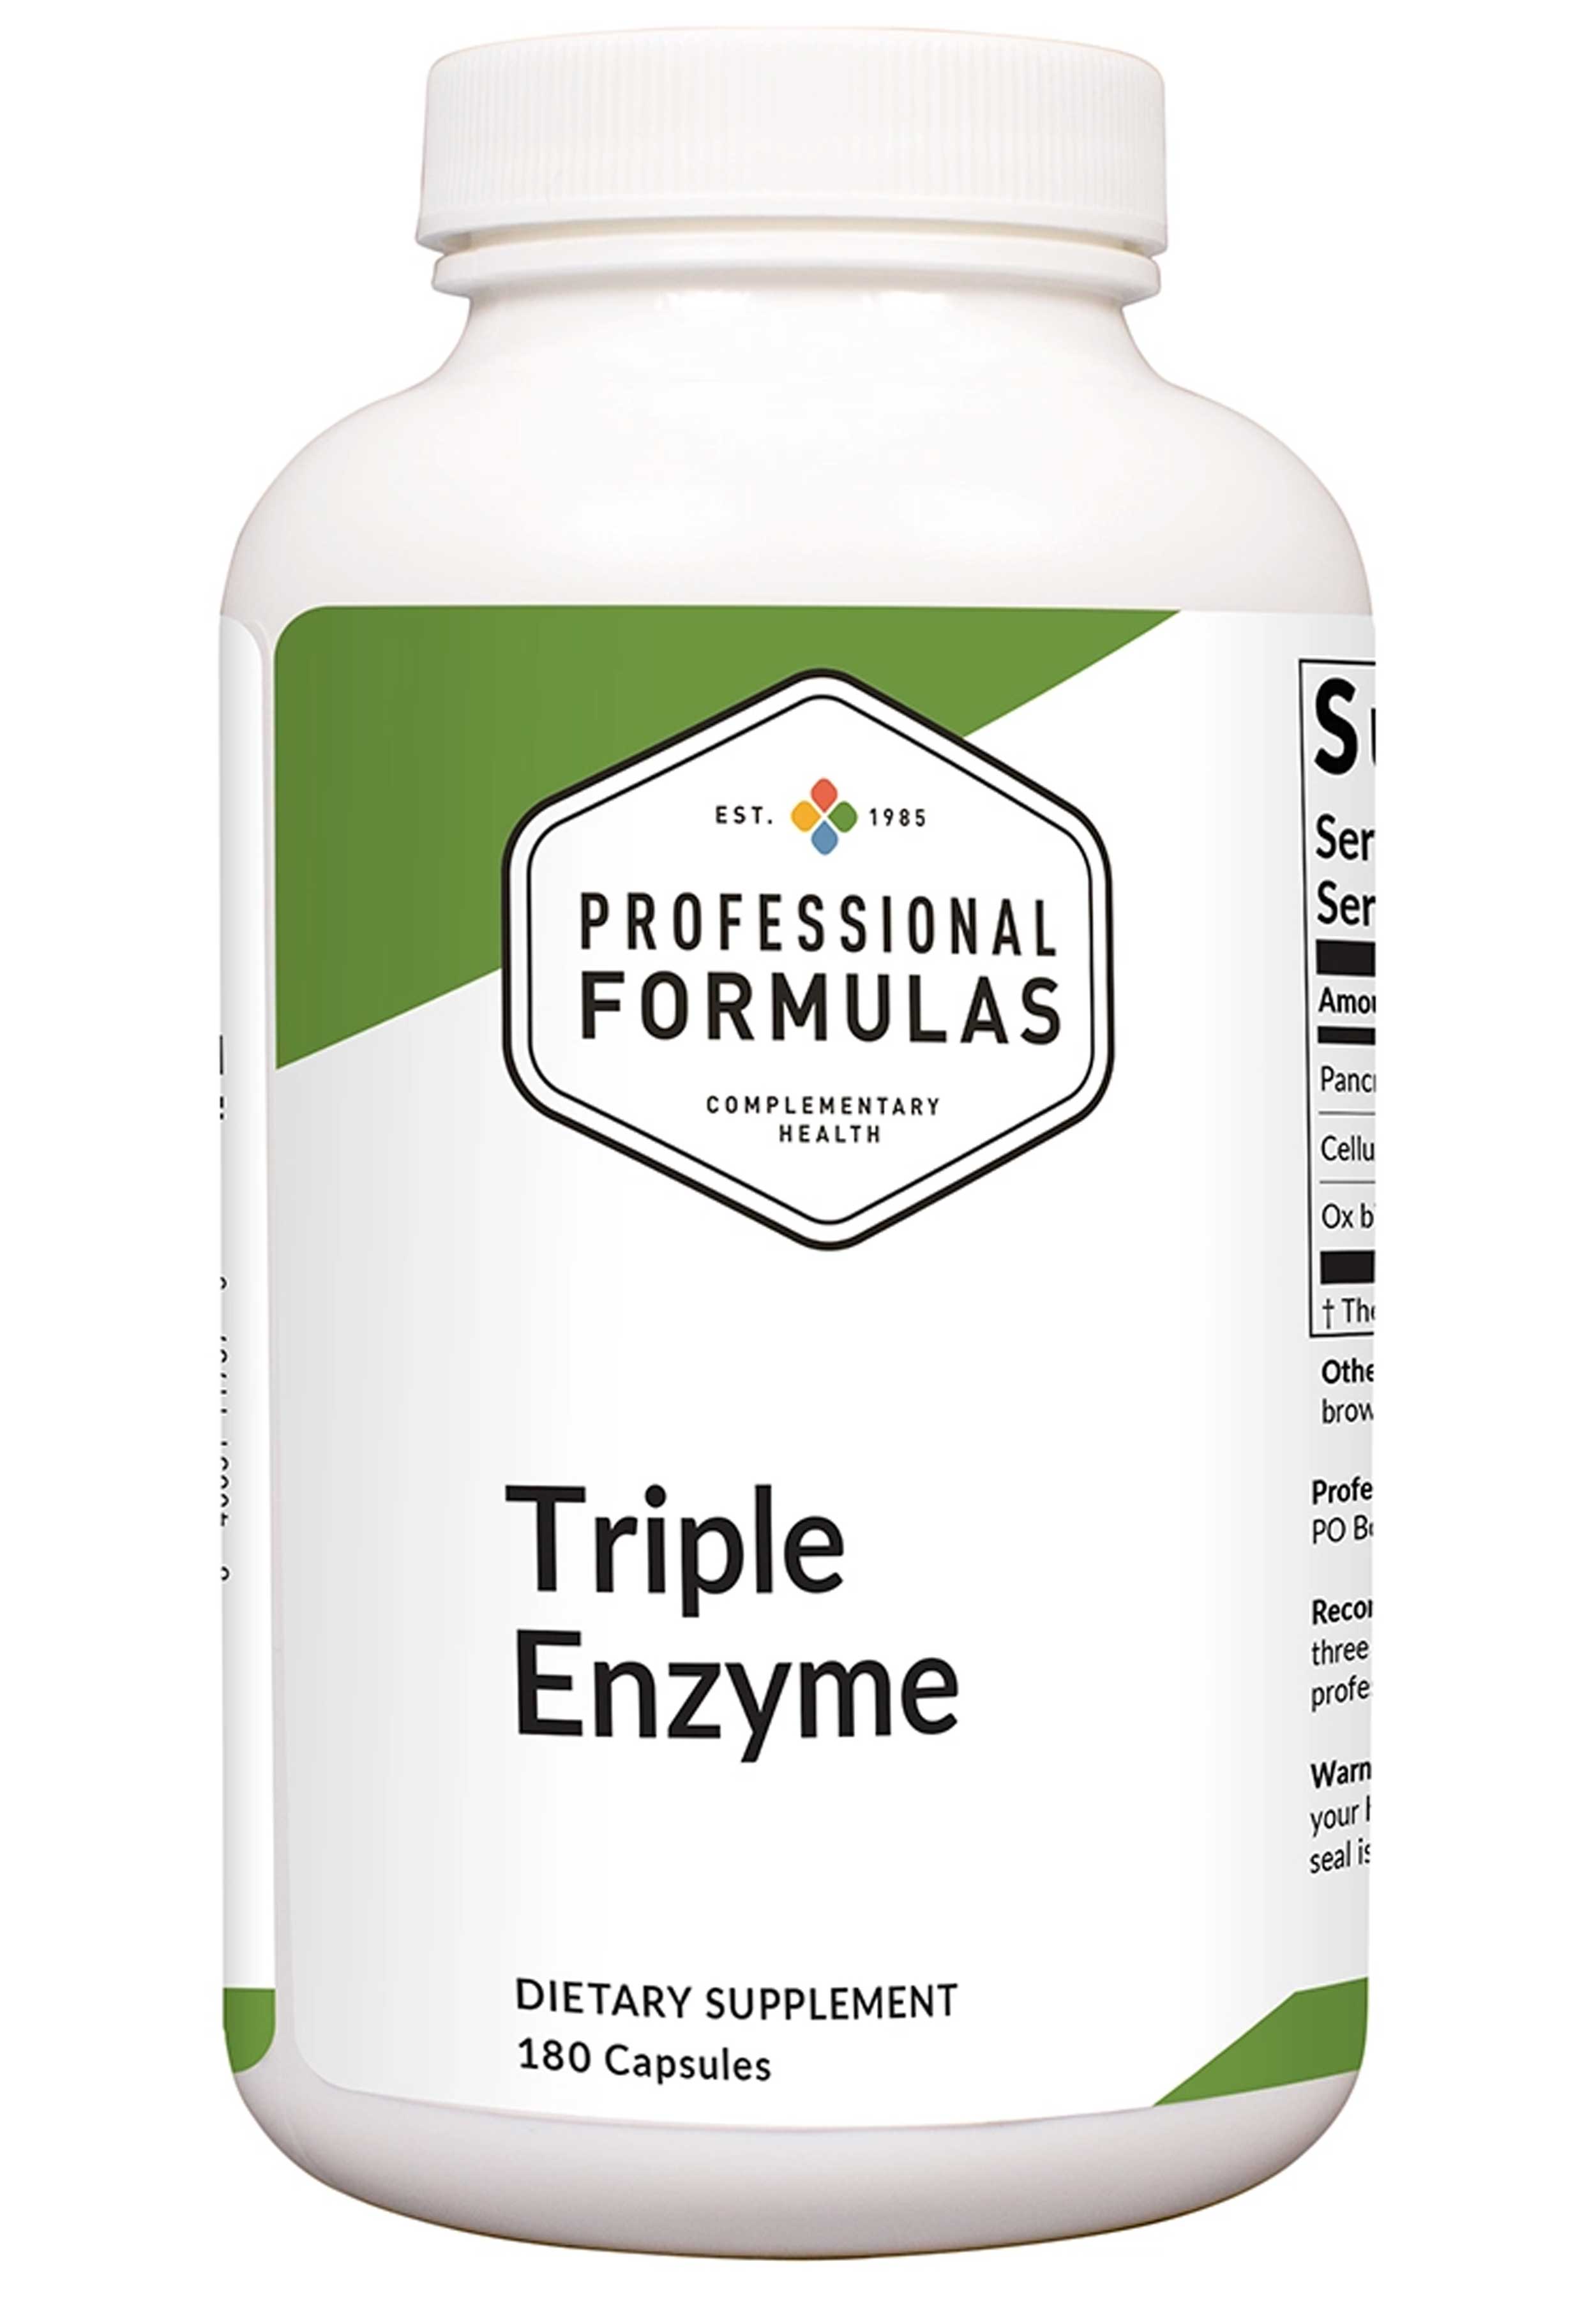 Professional Formulas Triple Enzyme Formula